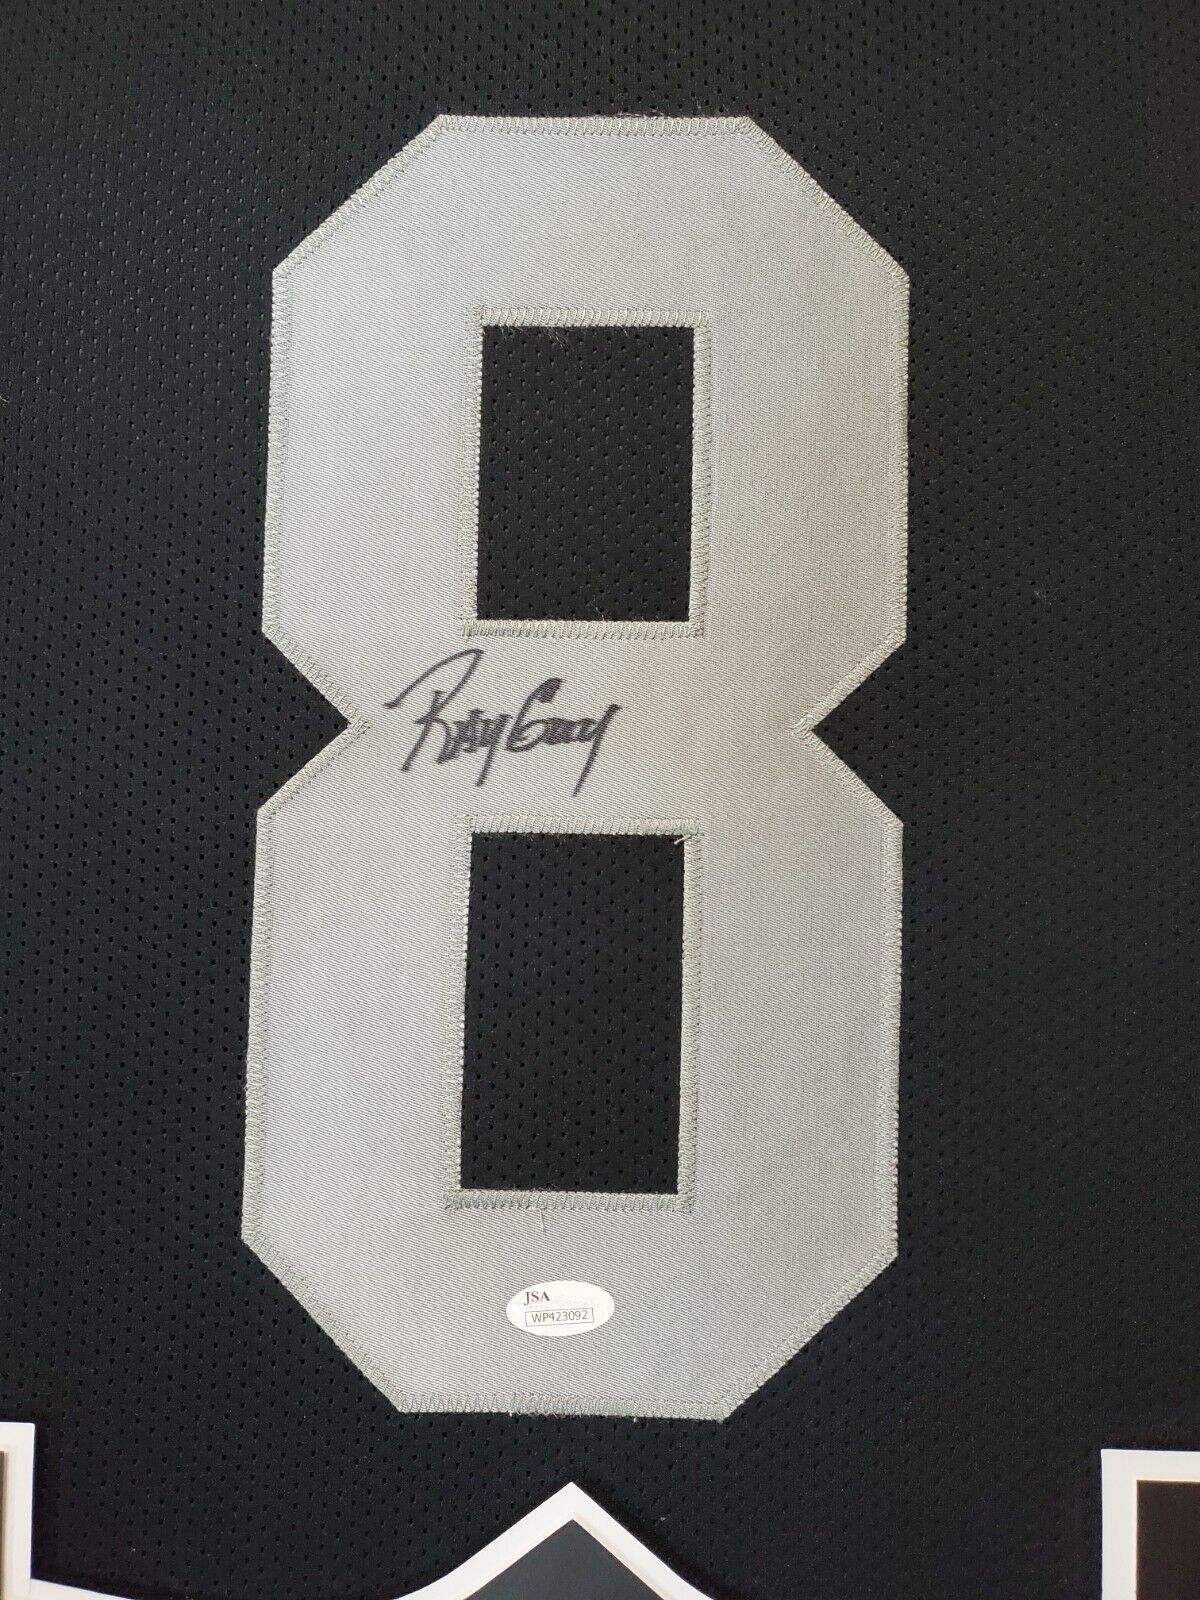 MVP Authentics Framed Oakland Raiders Ray Guy Autographed Signed Jersey Jsa Coa 765 sports jersey framing , jersey framing